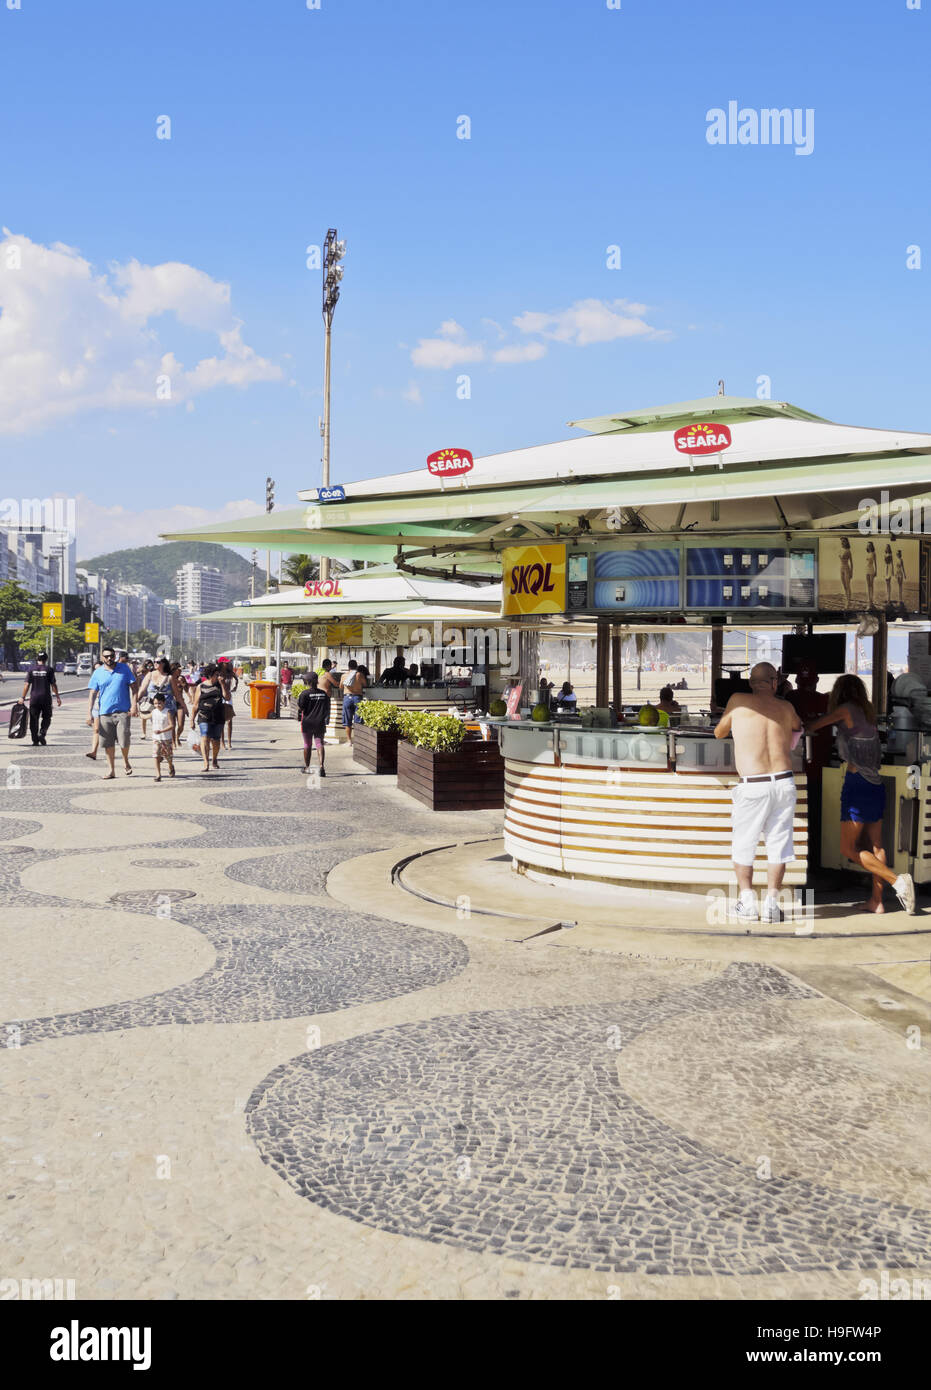 Brazil, City of Rio de Janeiro, Portuguese wave pattern pavement and beach bar at Copacabana. Stock Photo